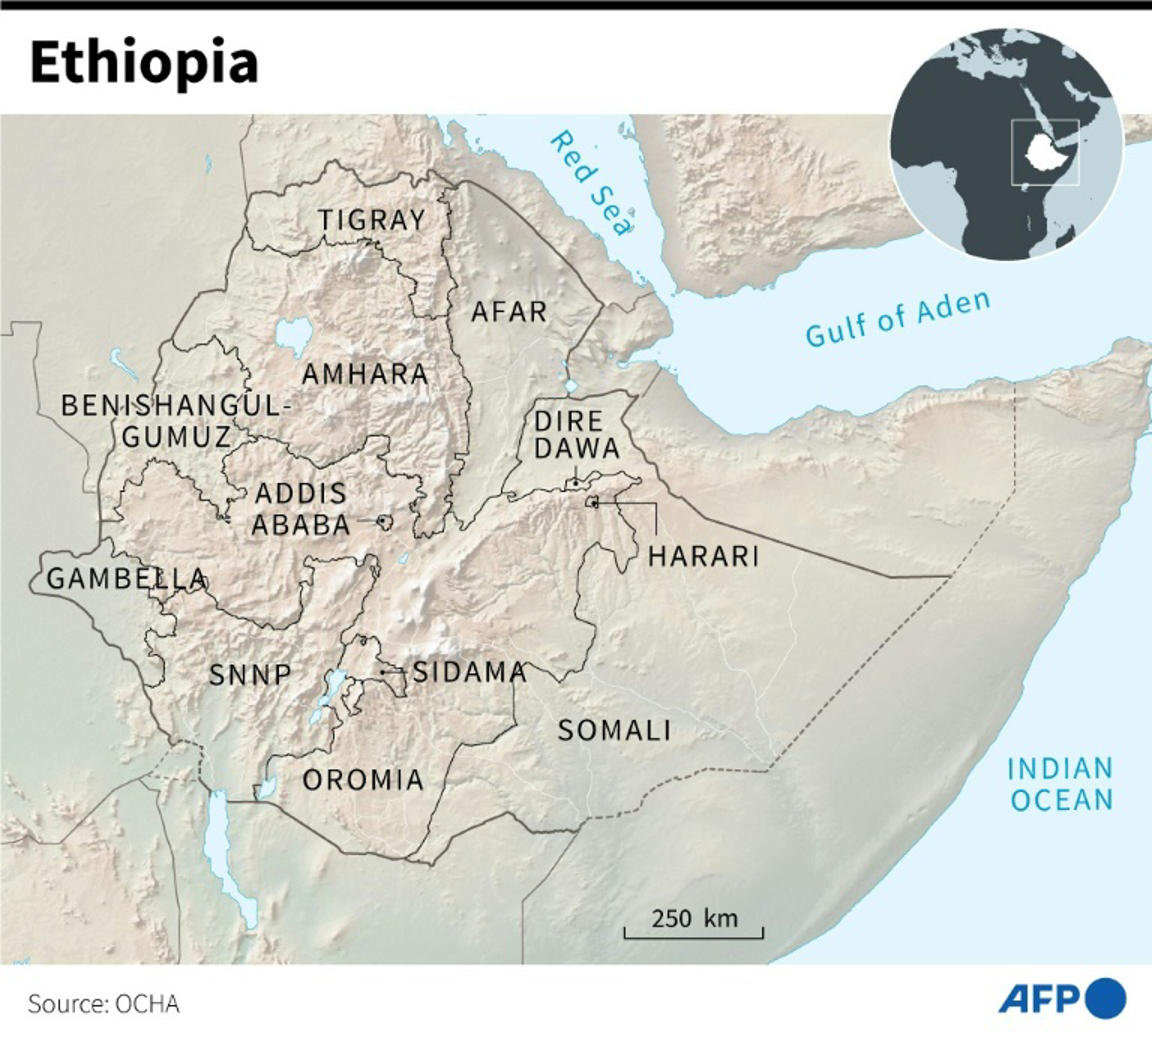 Does tinder work in ethiopia?